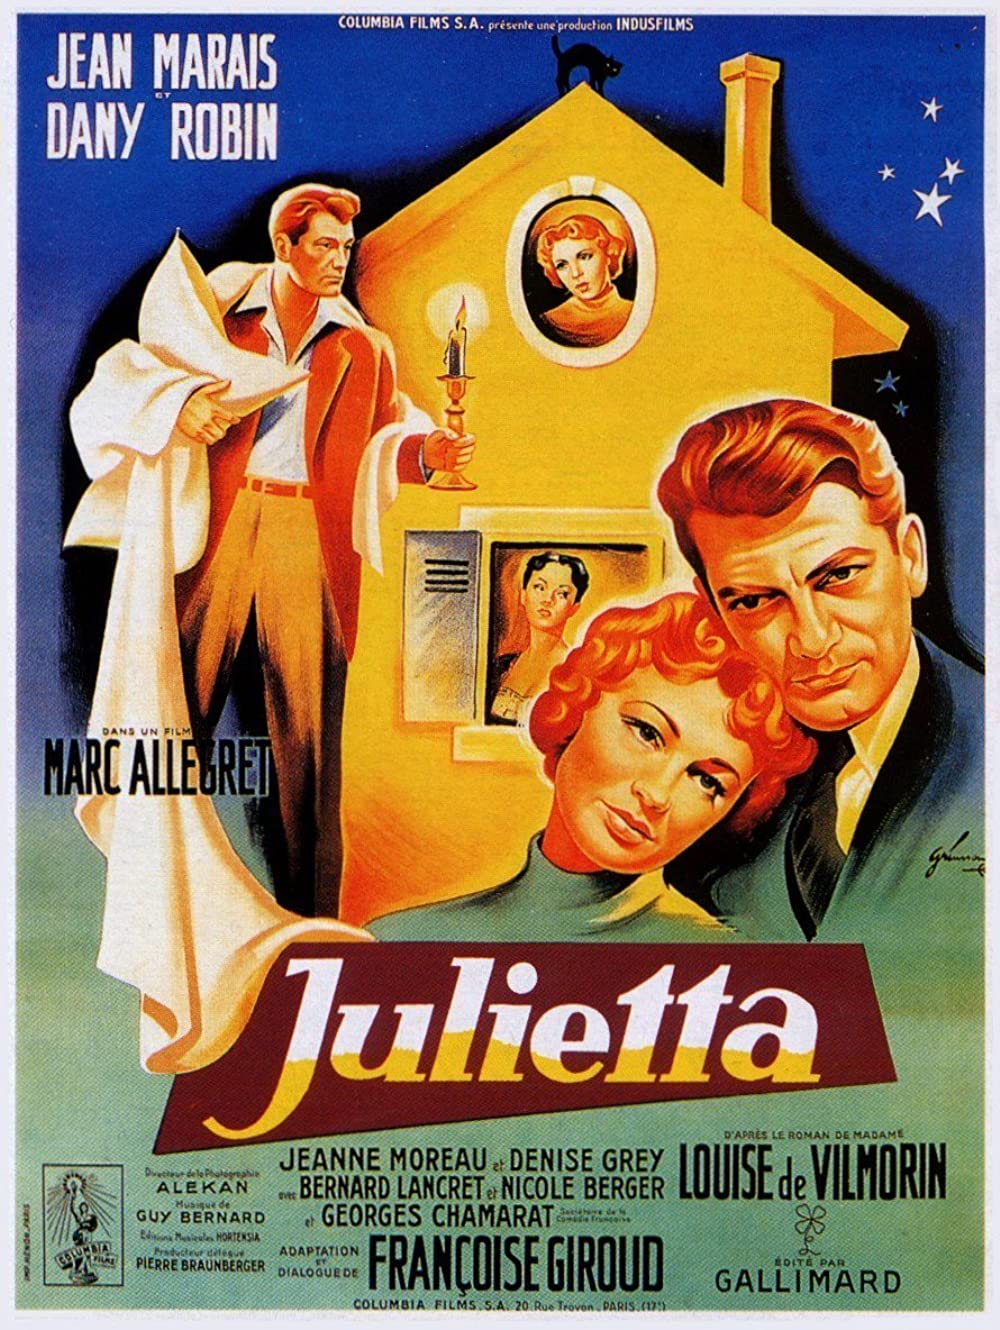 Filmbeschreibung zu Julietta (1953)